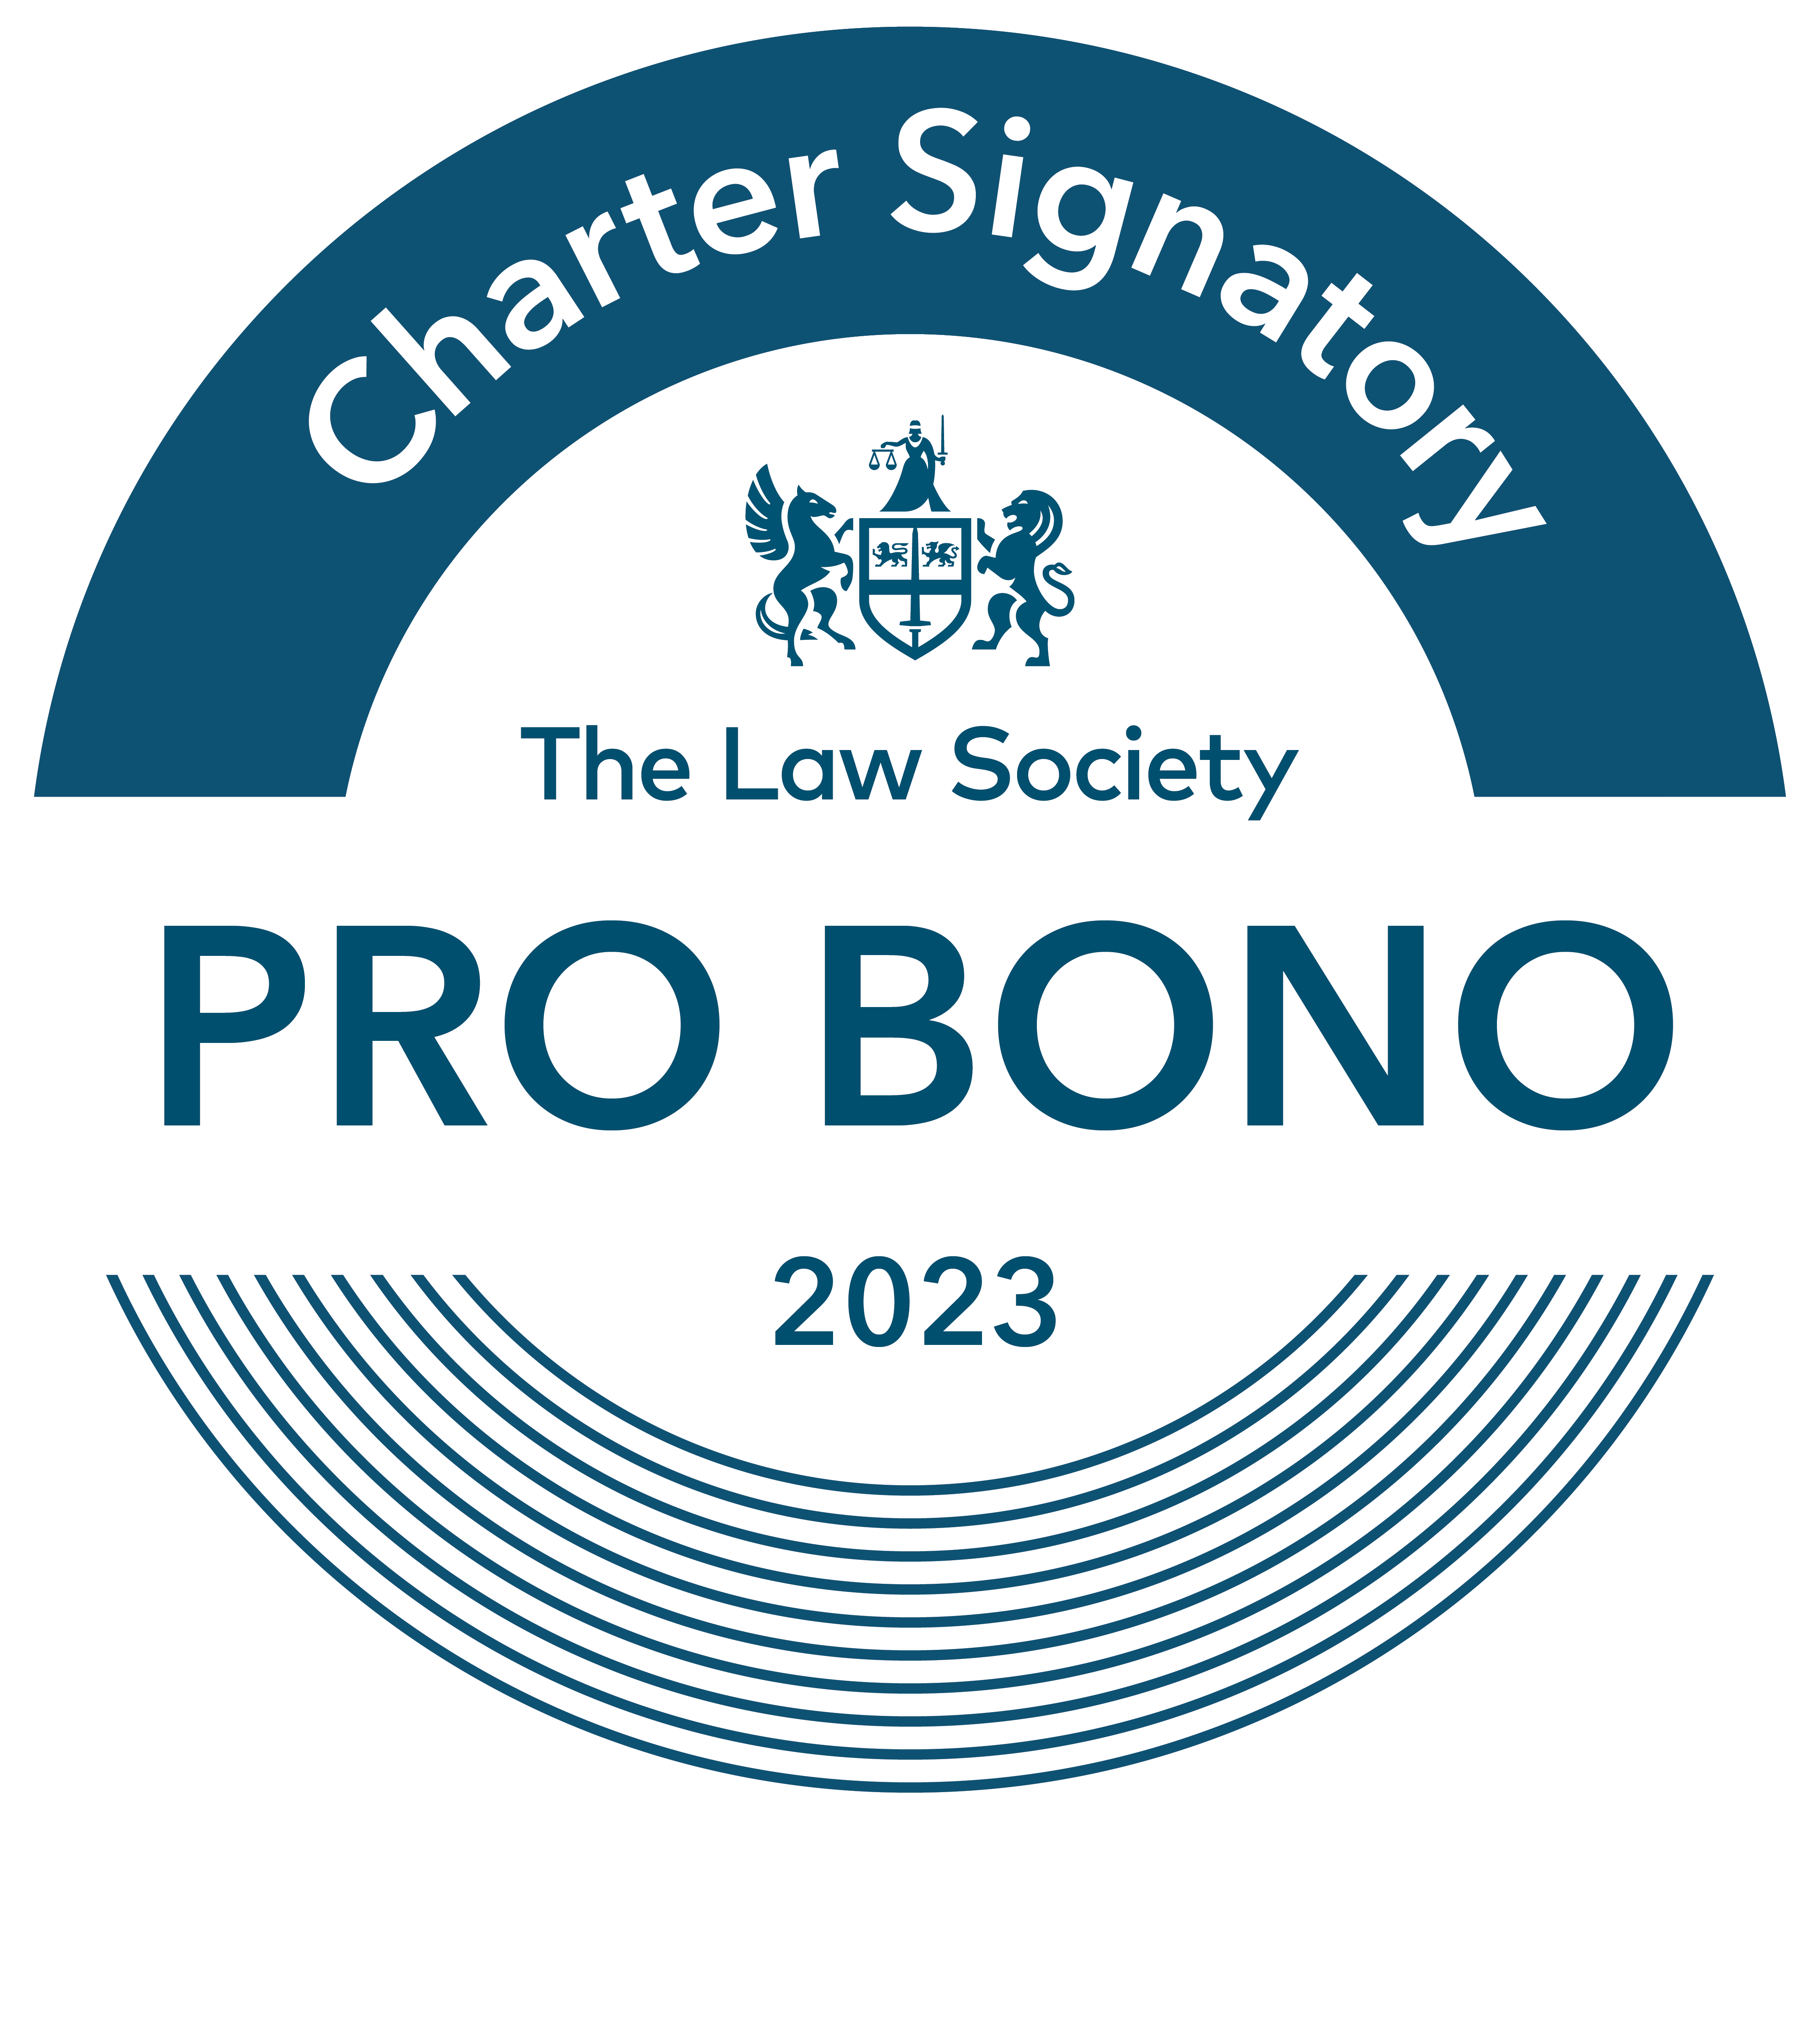 Pro Bono Charter Forum